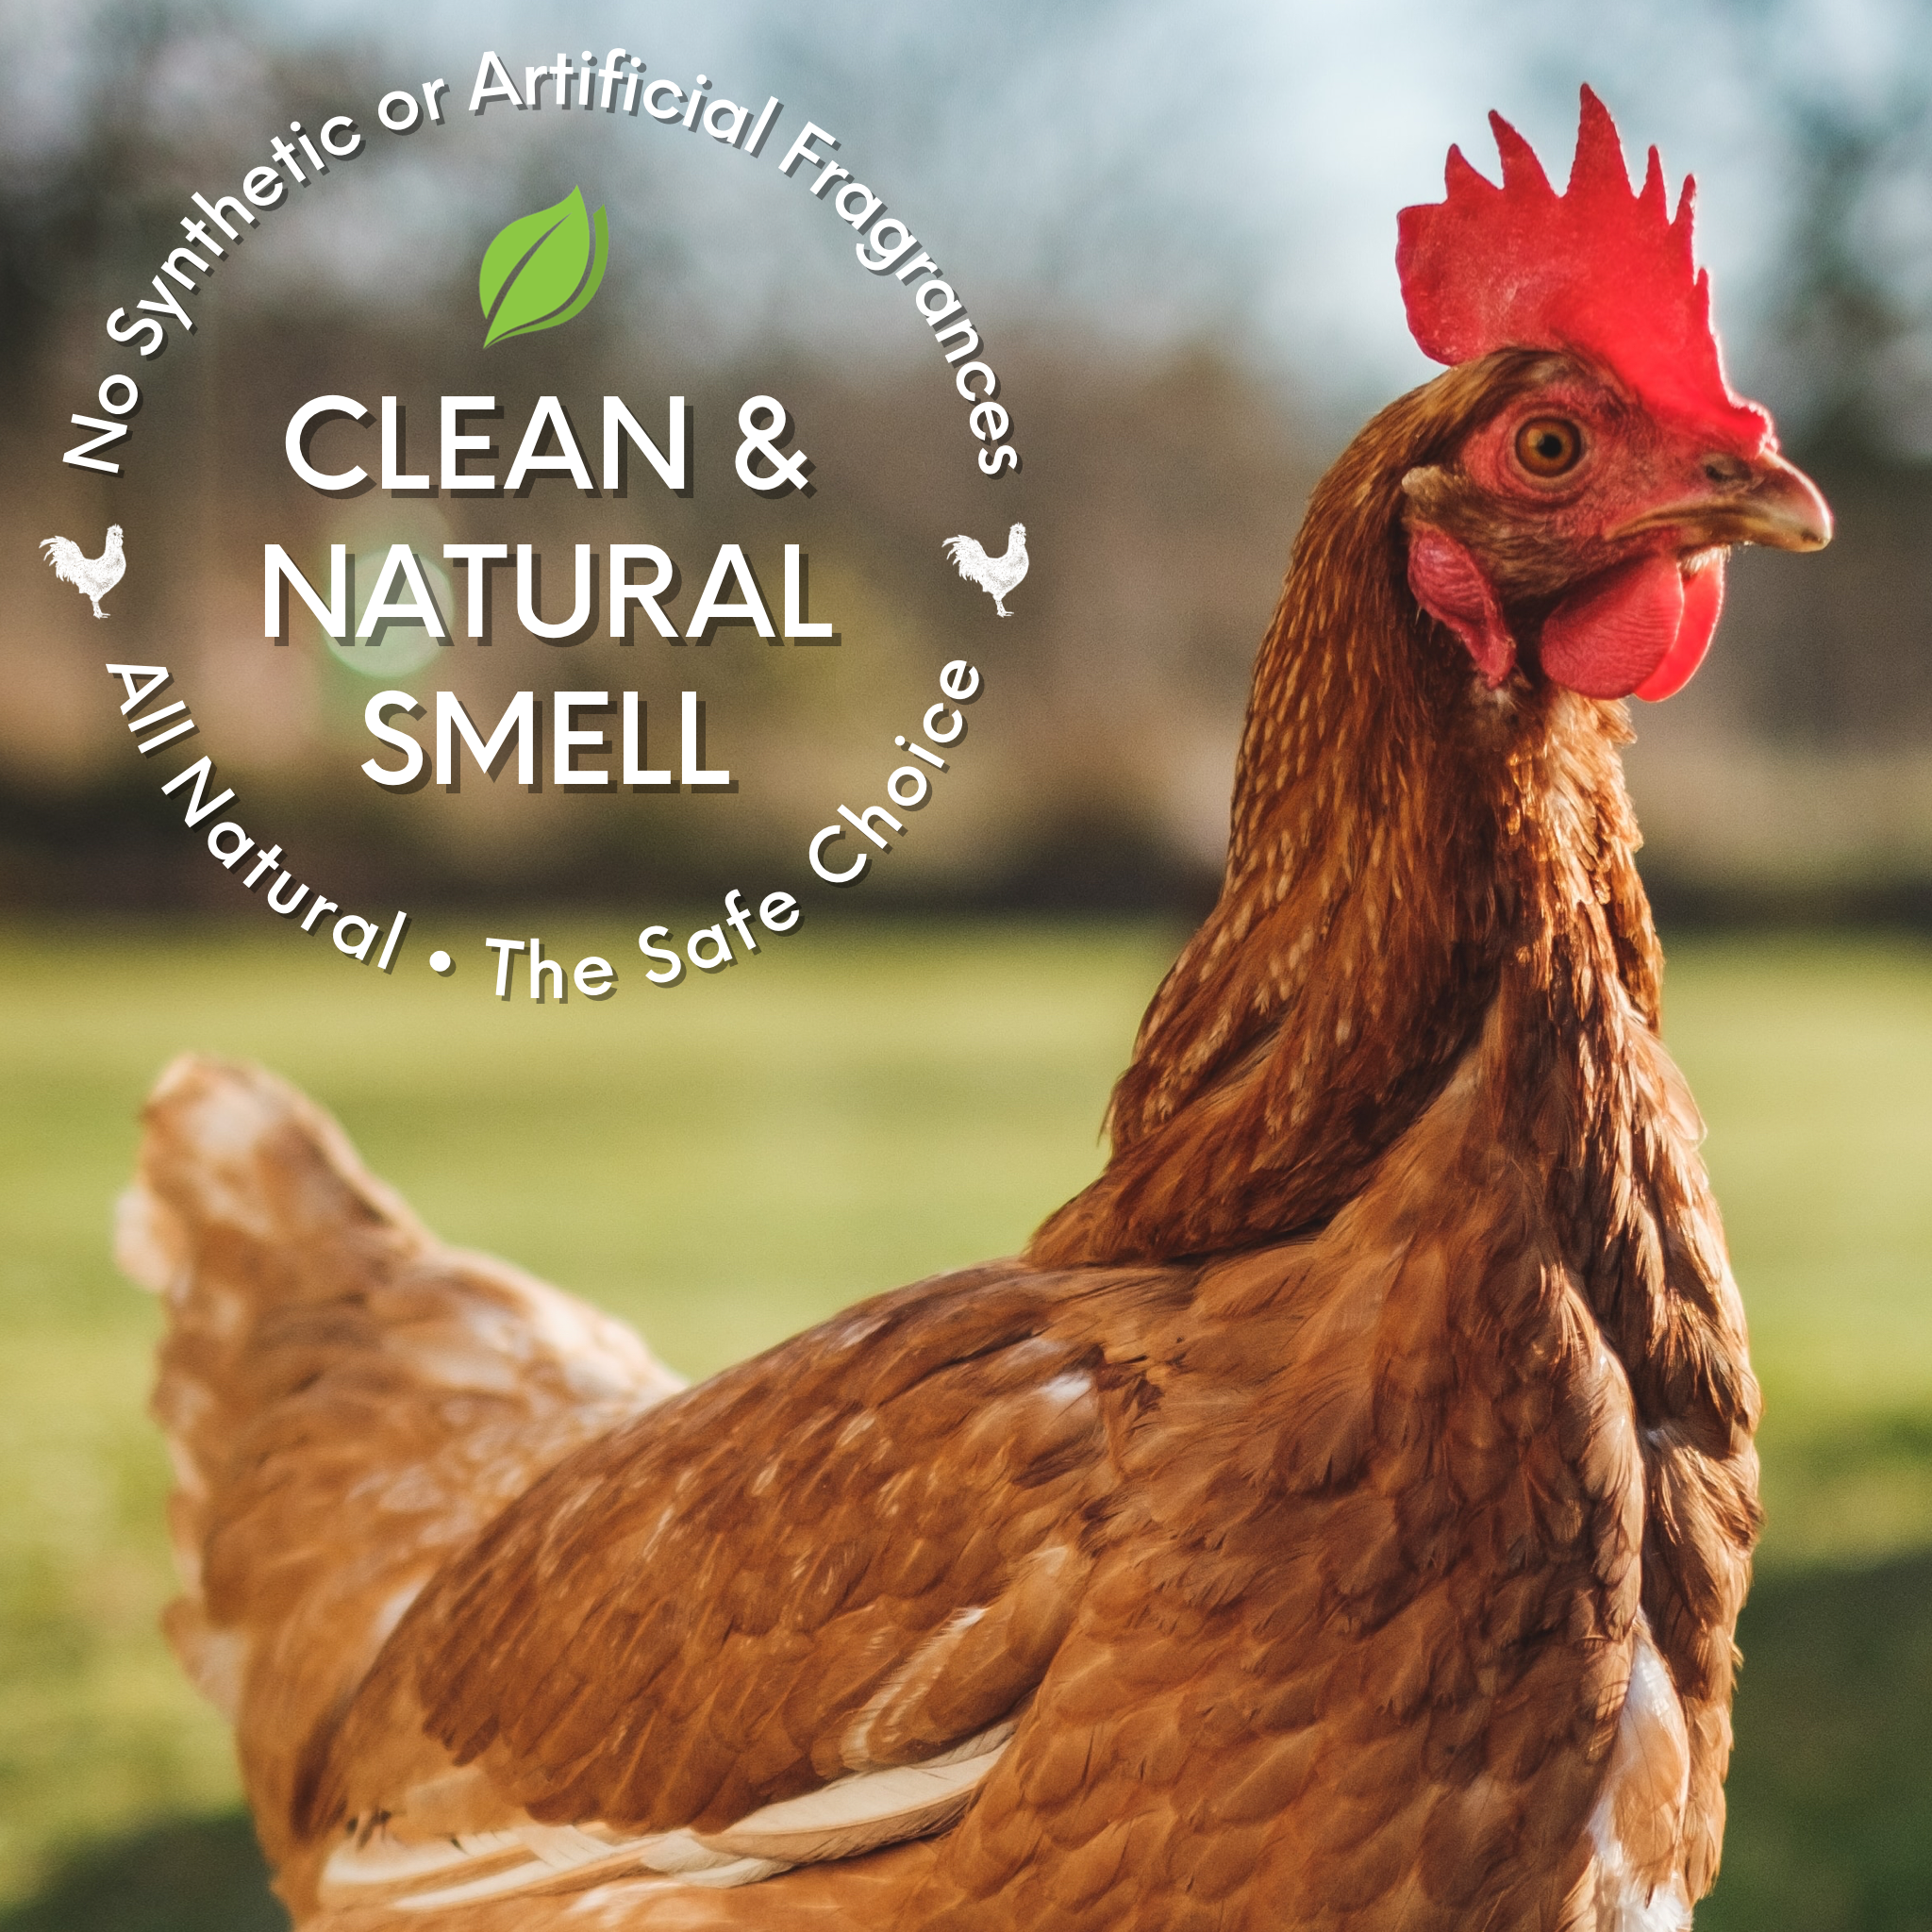 Chick Fresh - Eliminate Odors & Ammonia For Backyard Chickens